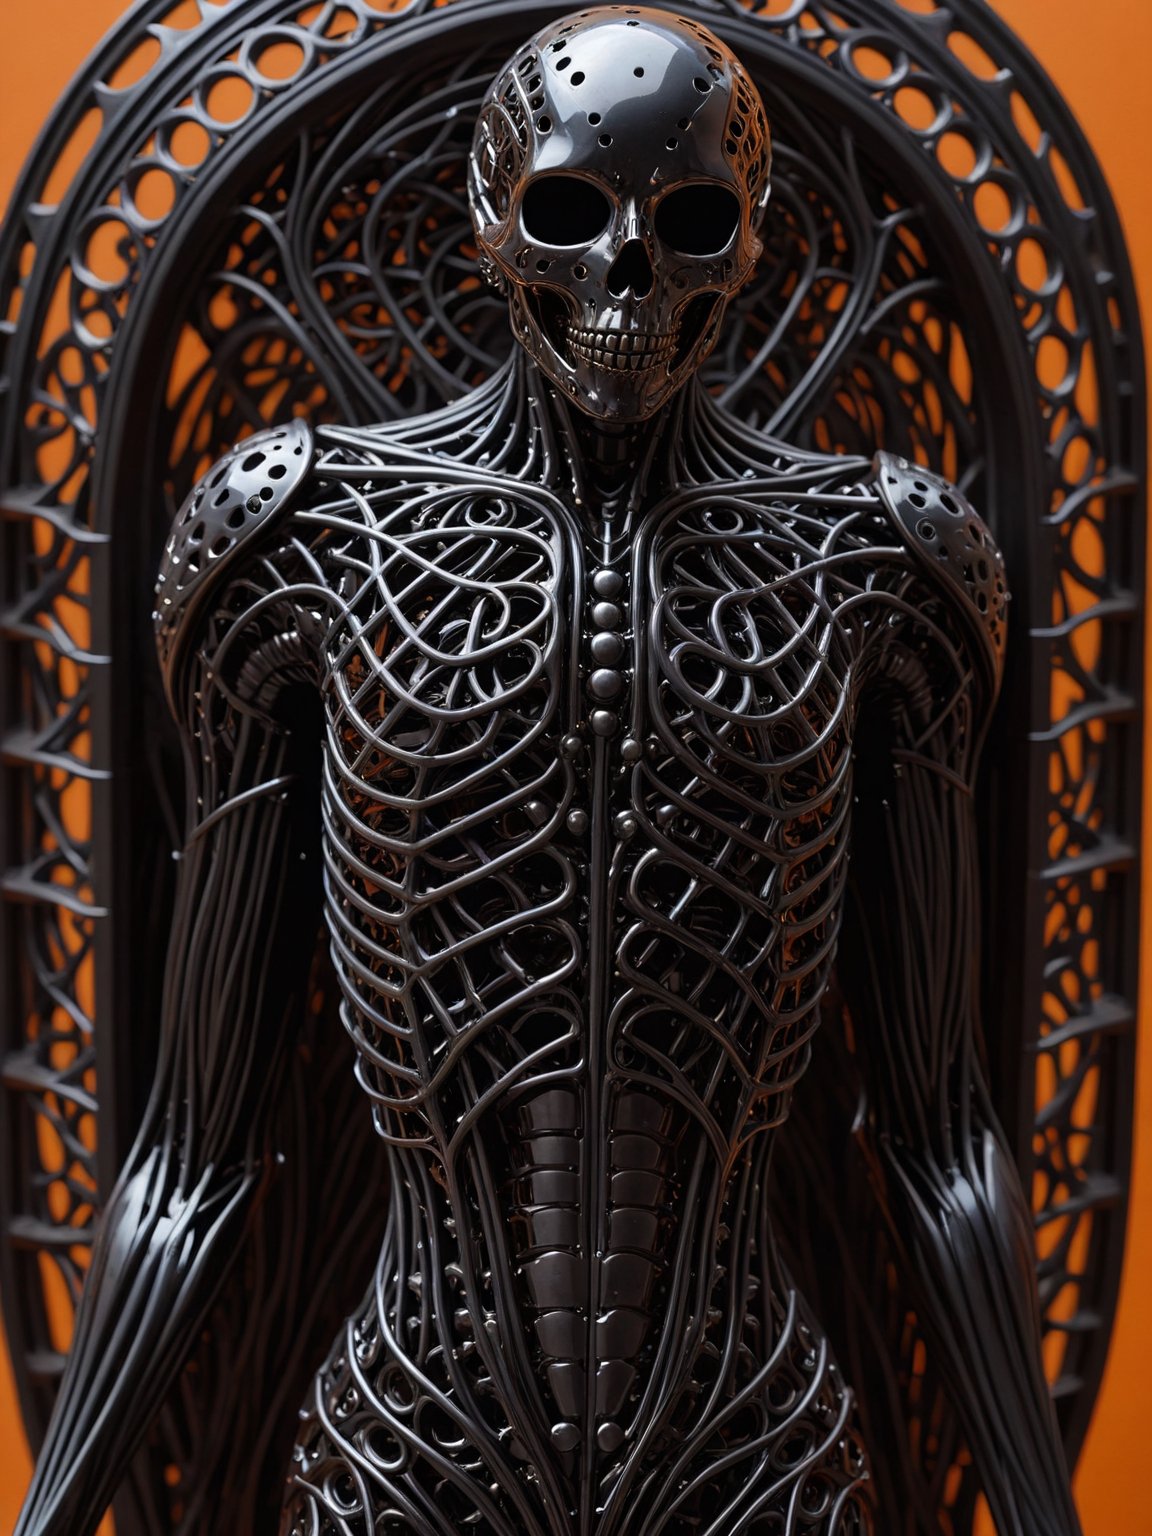 masterpiece, intricate details, dark metal black skeleton cyborg, exquisite delicate metal body structure, intricate detailed filigree delicate inner structure, (voids in body:1.5), (voids in body:1.5), (gaps in body:1.5), (holes in body:1.5), (hollows in body:1.5), close-up shot of torso, see through body, orange background,ral-pnrse,Movie Still,g1h3r